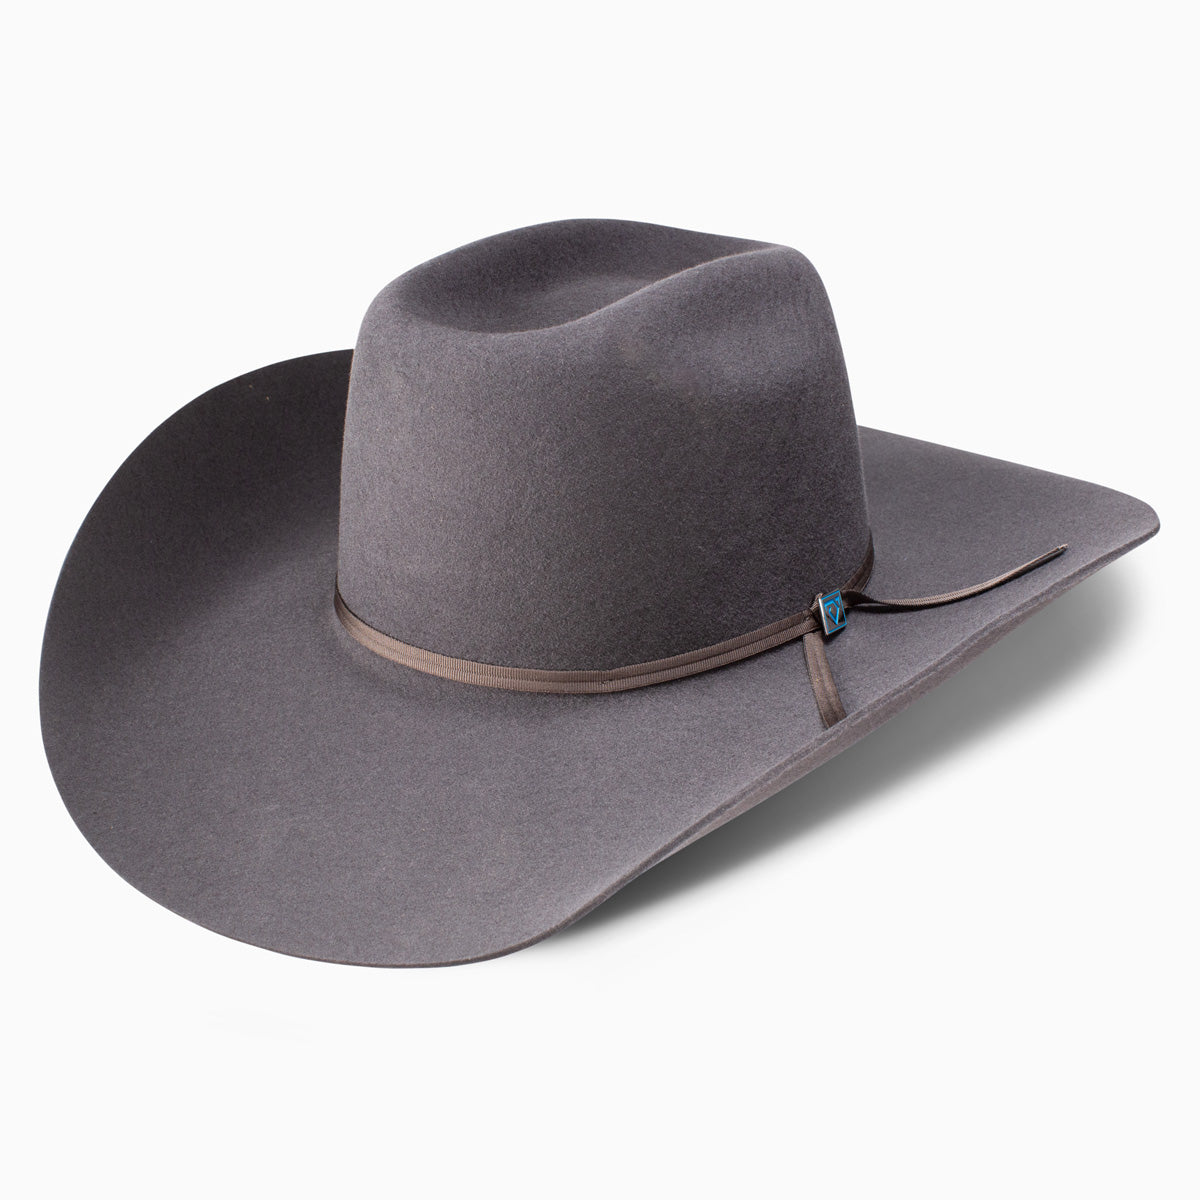 Resistol Cody Johnson 3X Black 9th Round Cowboy Hat RW9TRD-CJ420772 7 1/4